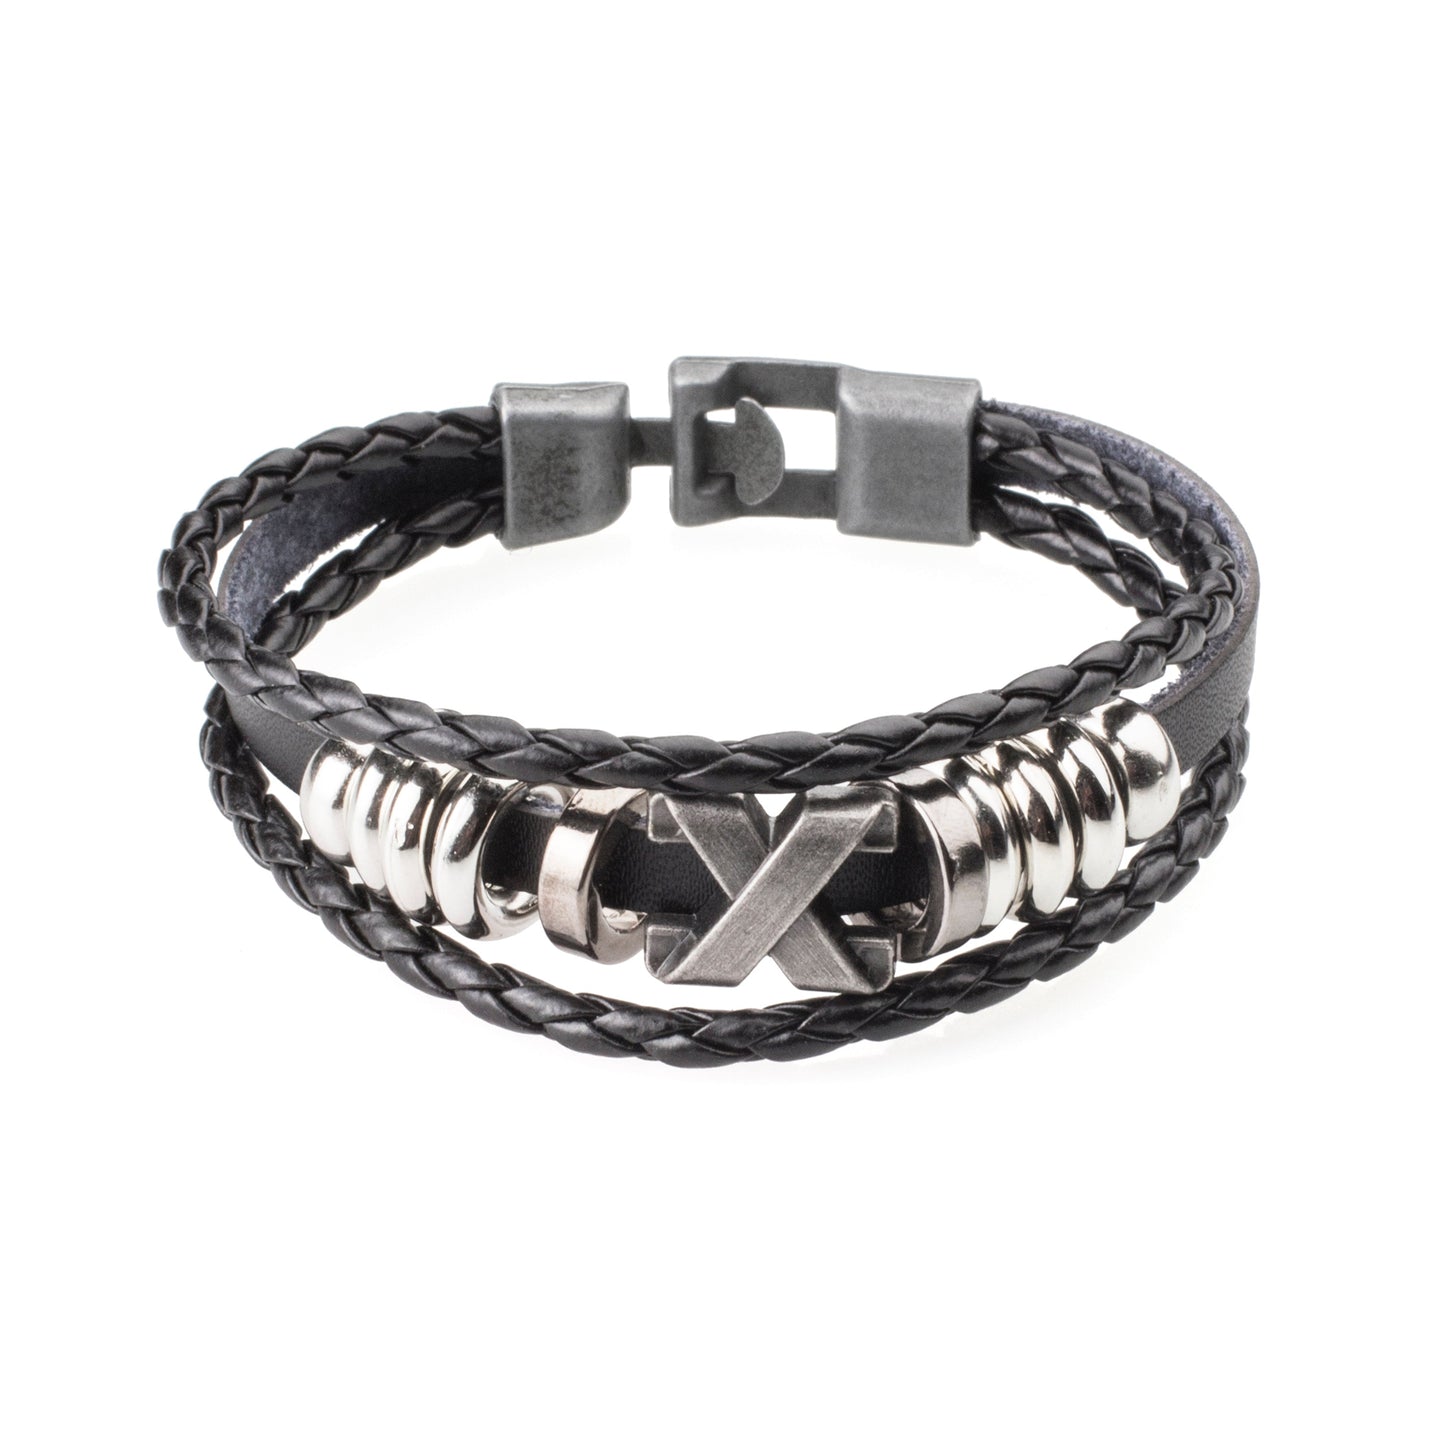 Multilayer Braided Leather Bracelet for Men / Boys with Stainless Steel Cross Charm (SJ_3233_BK)